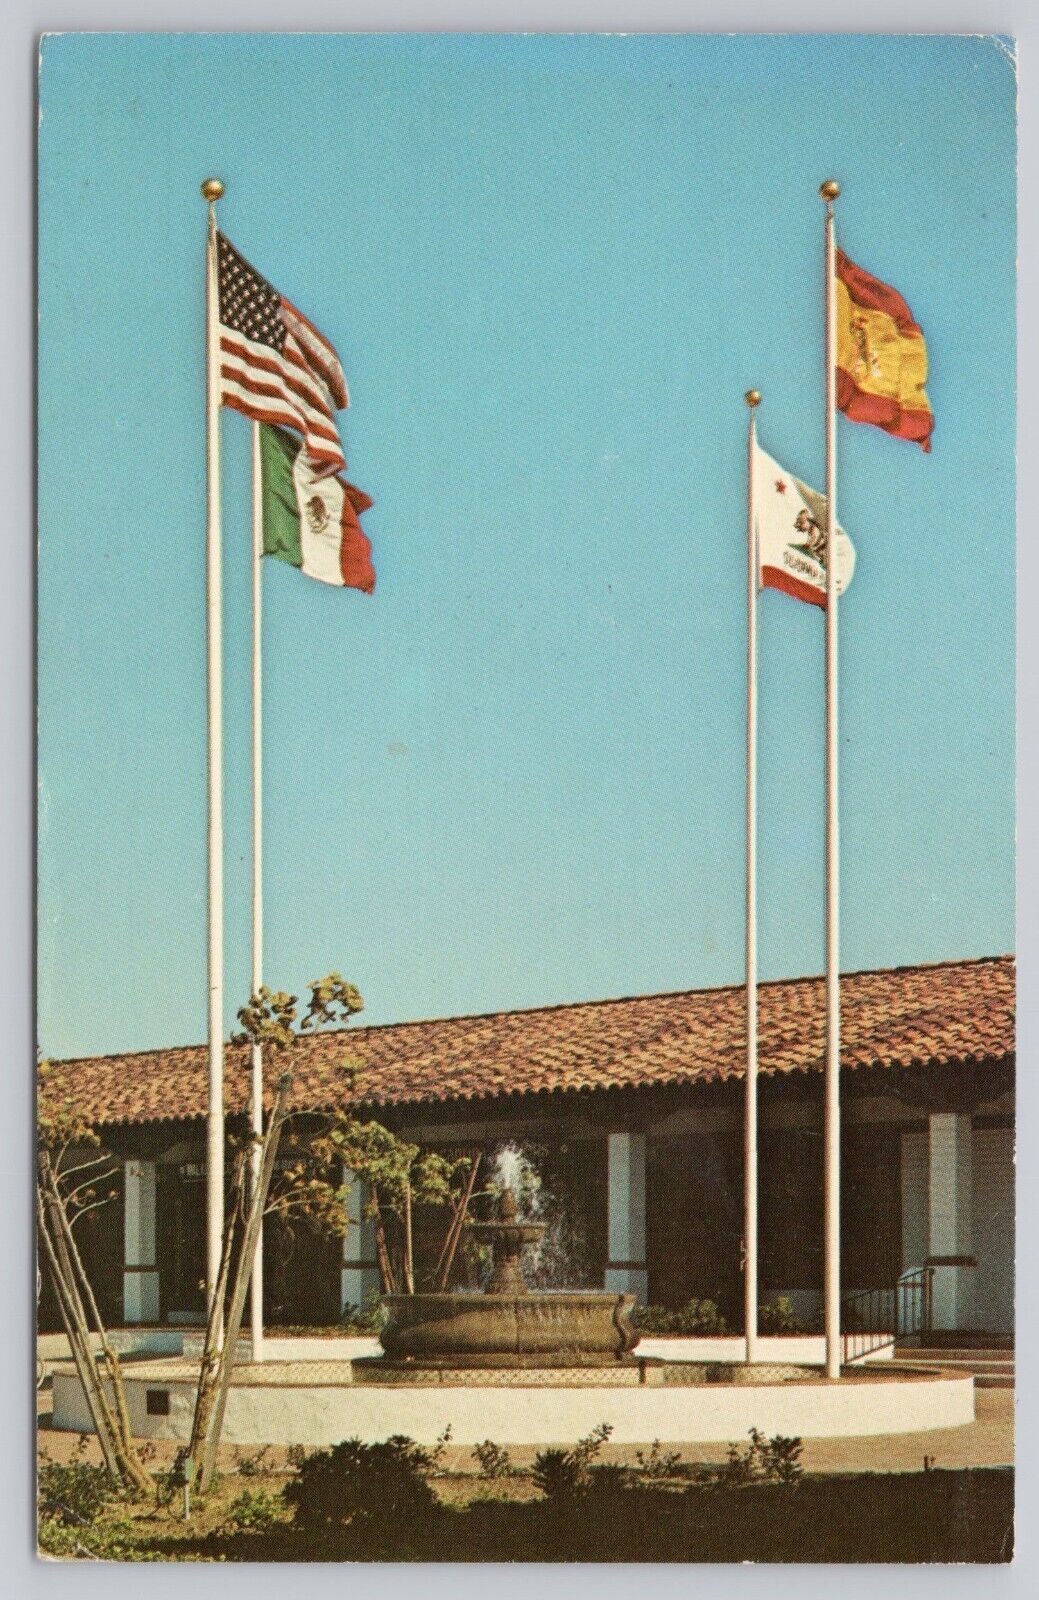 Solana Beach California, Lomas Santa Fe Plaza Four Flags Fountain, VTG Postcard